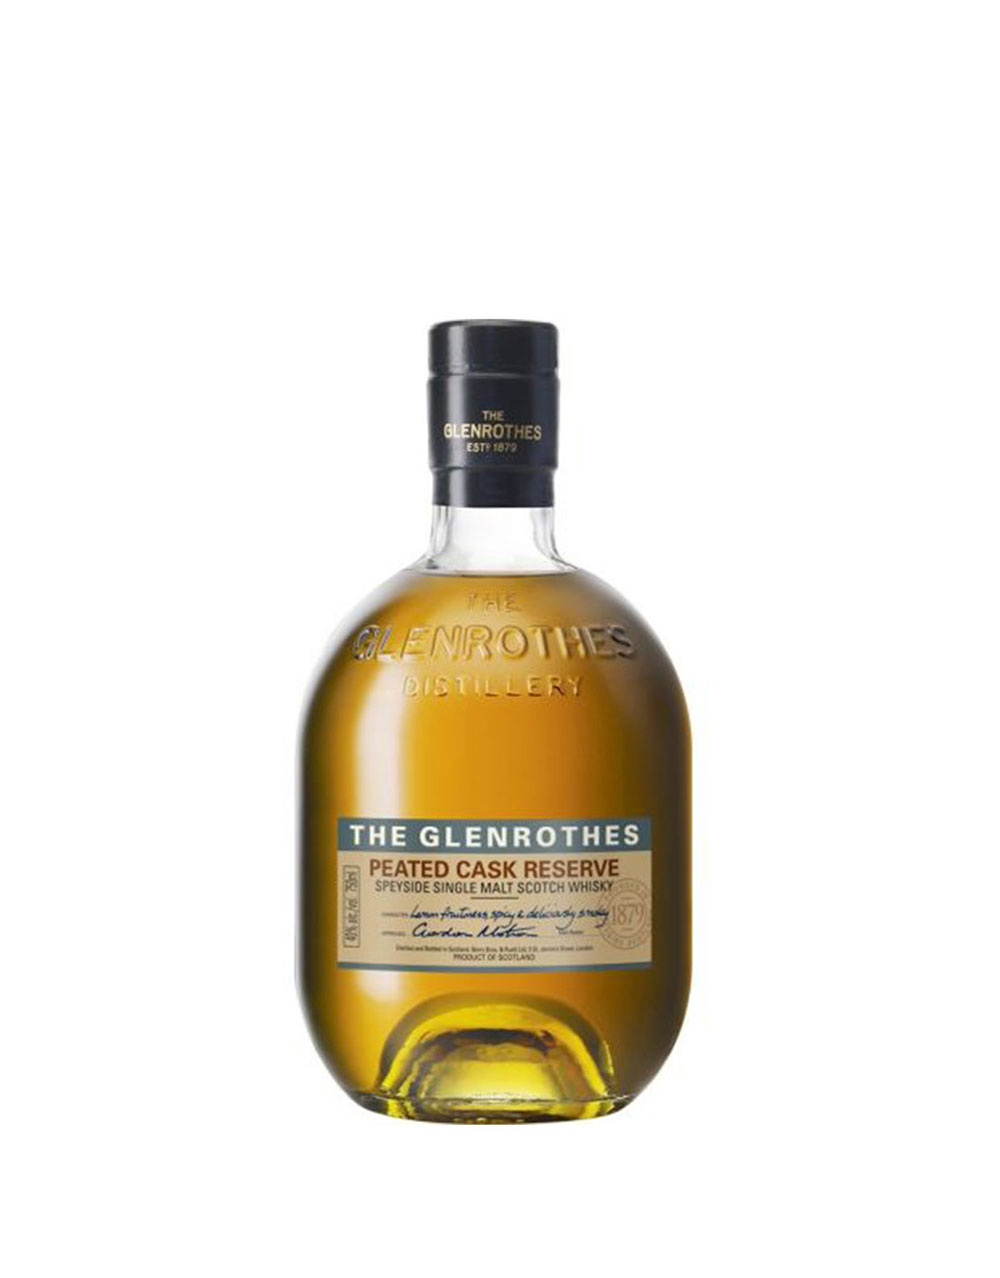 The Glenrothes Peated Cask Reserve Single Malt Scotch Whisky